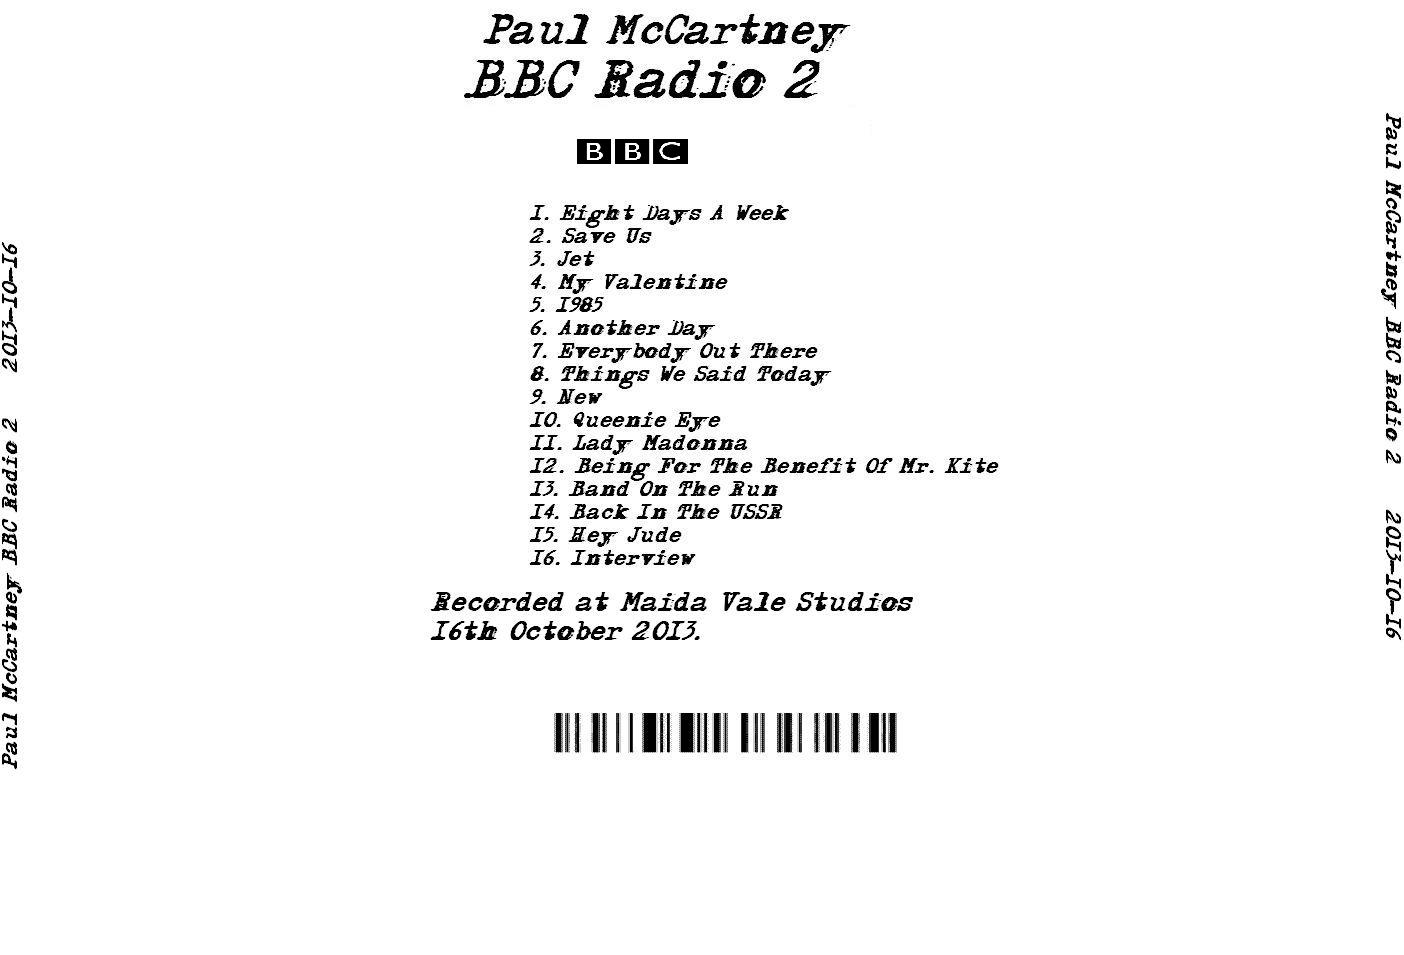 PaulMcCartney2013-10-16BBCRadio2InConcert.jpg